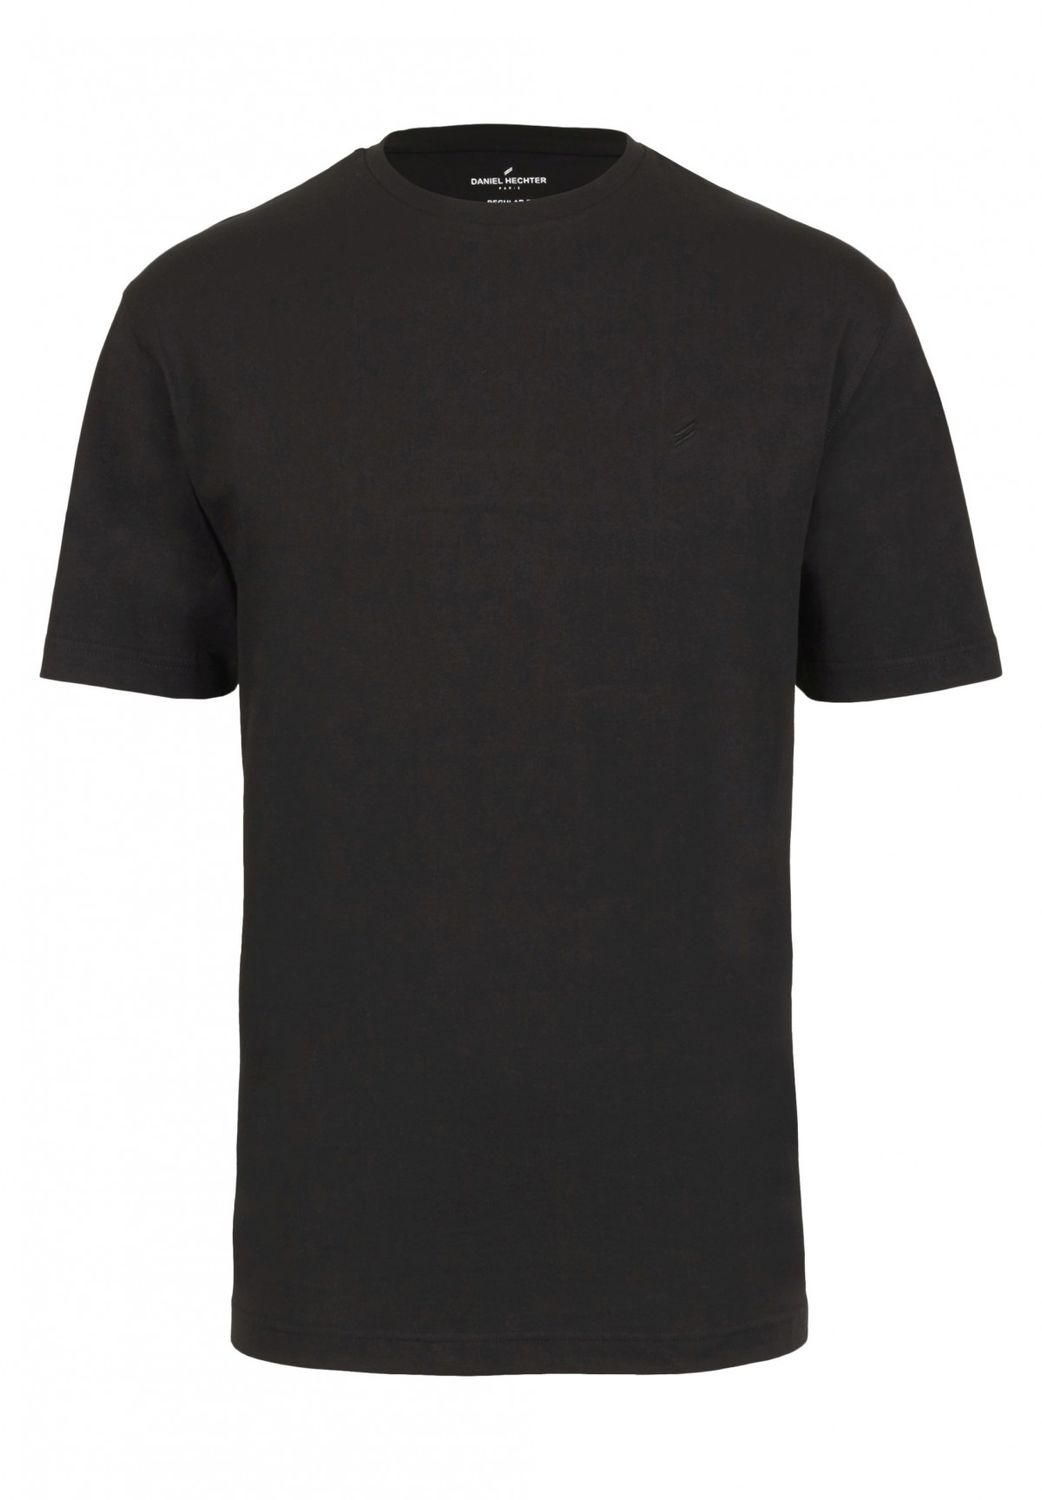 DANIEL HECHTER Doppelpack T-Shirt Rundhals regular-fit schwarz Art.Nr.  10283-472 090* | draussenaktiv